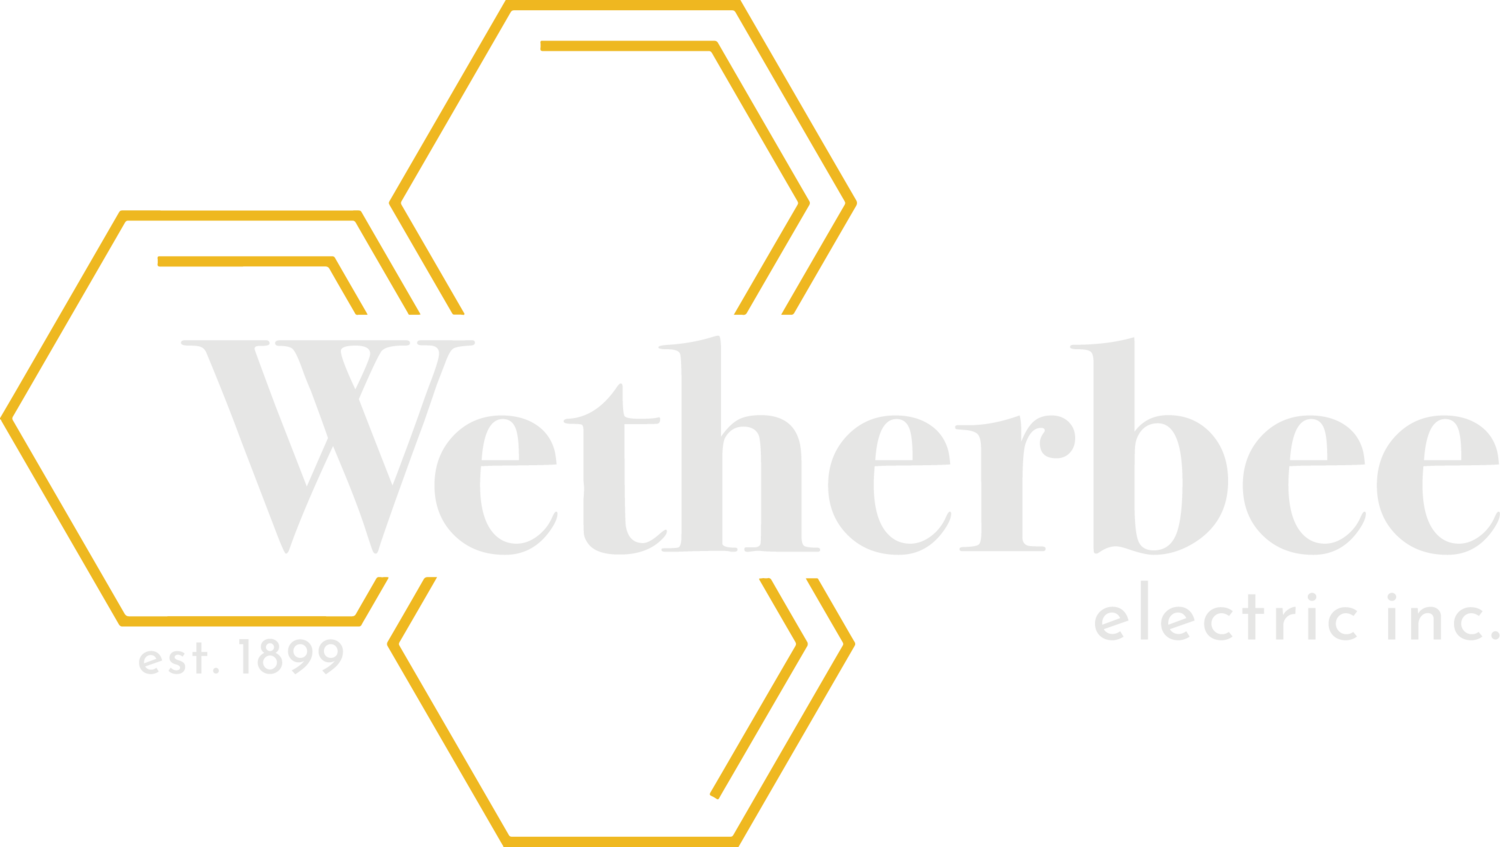 Wetherbee Electric Inc